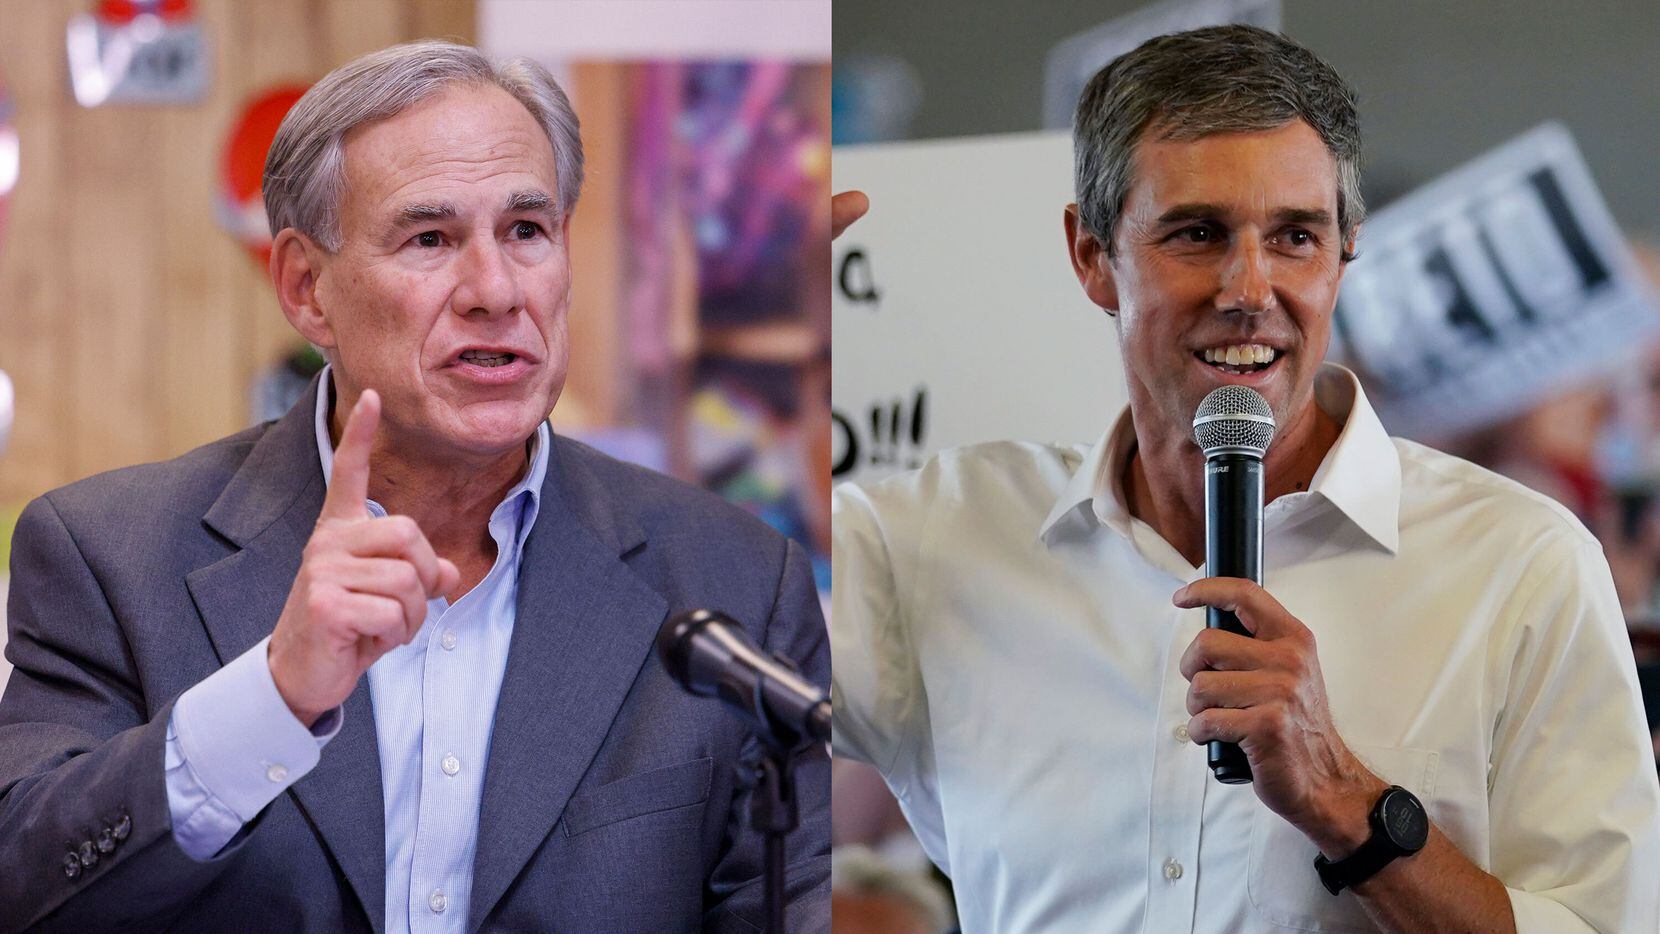 No solo Greg Abbott y Beto O'Rourke son candidatos a gobernador de Texas este 2022. En la...